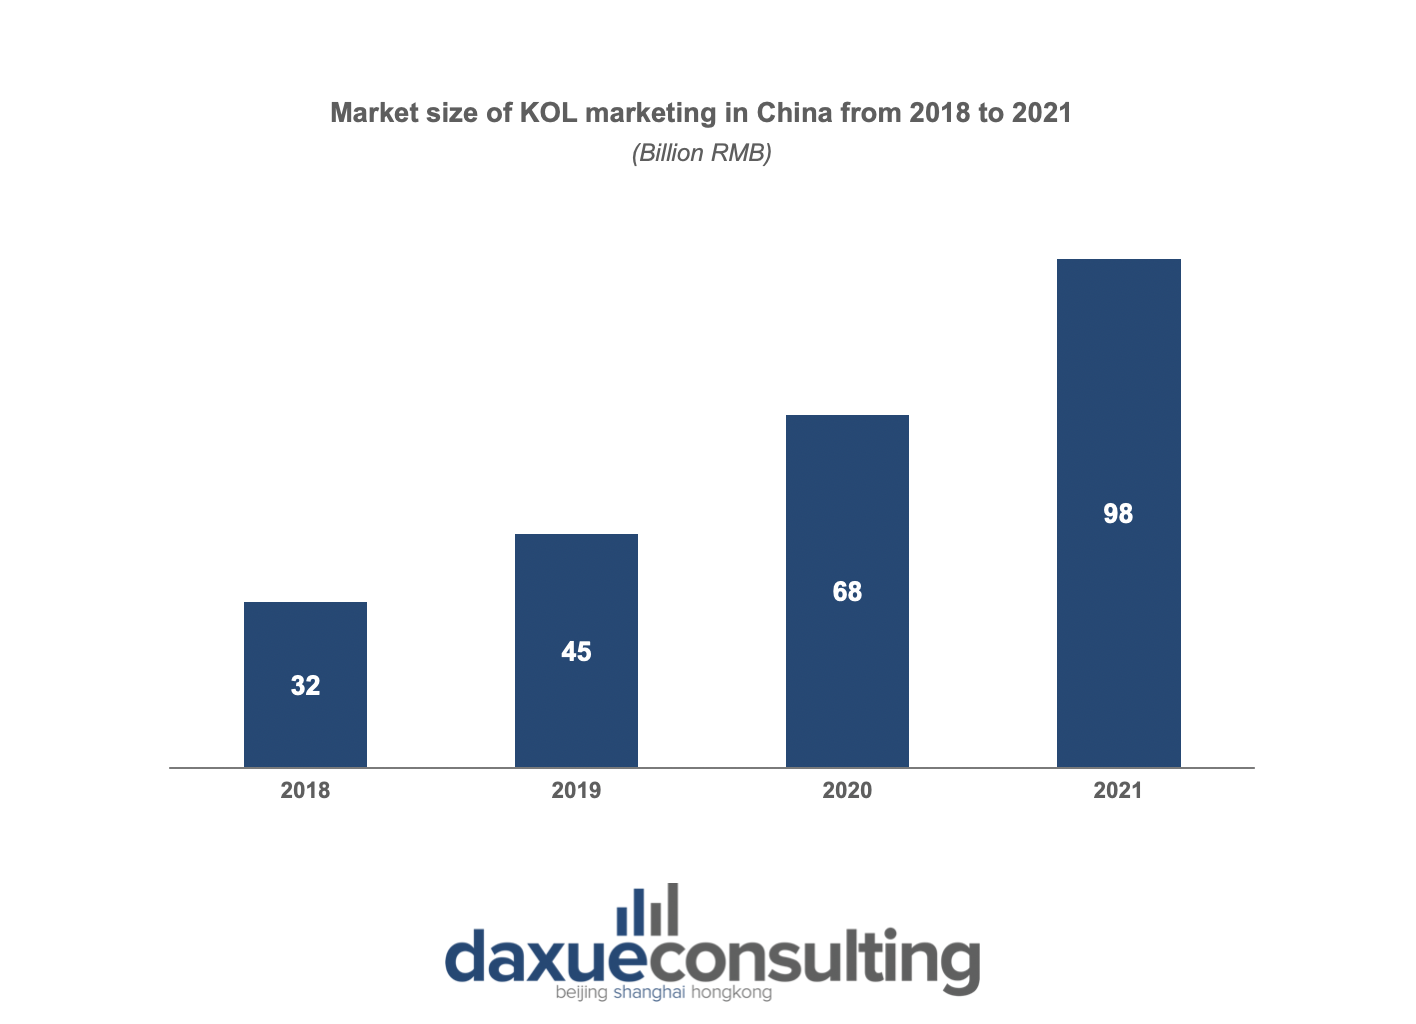 kOL marketing growth in China